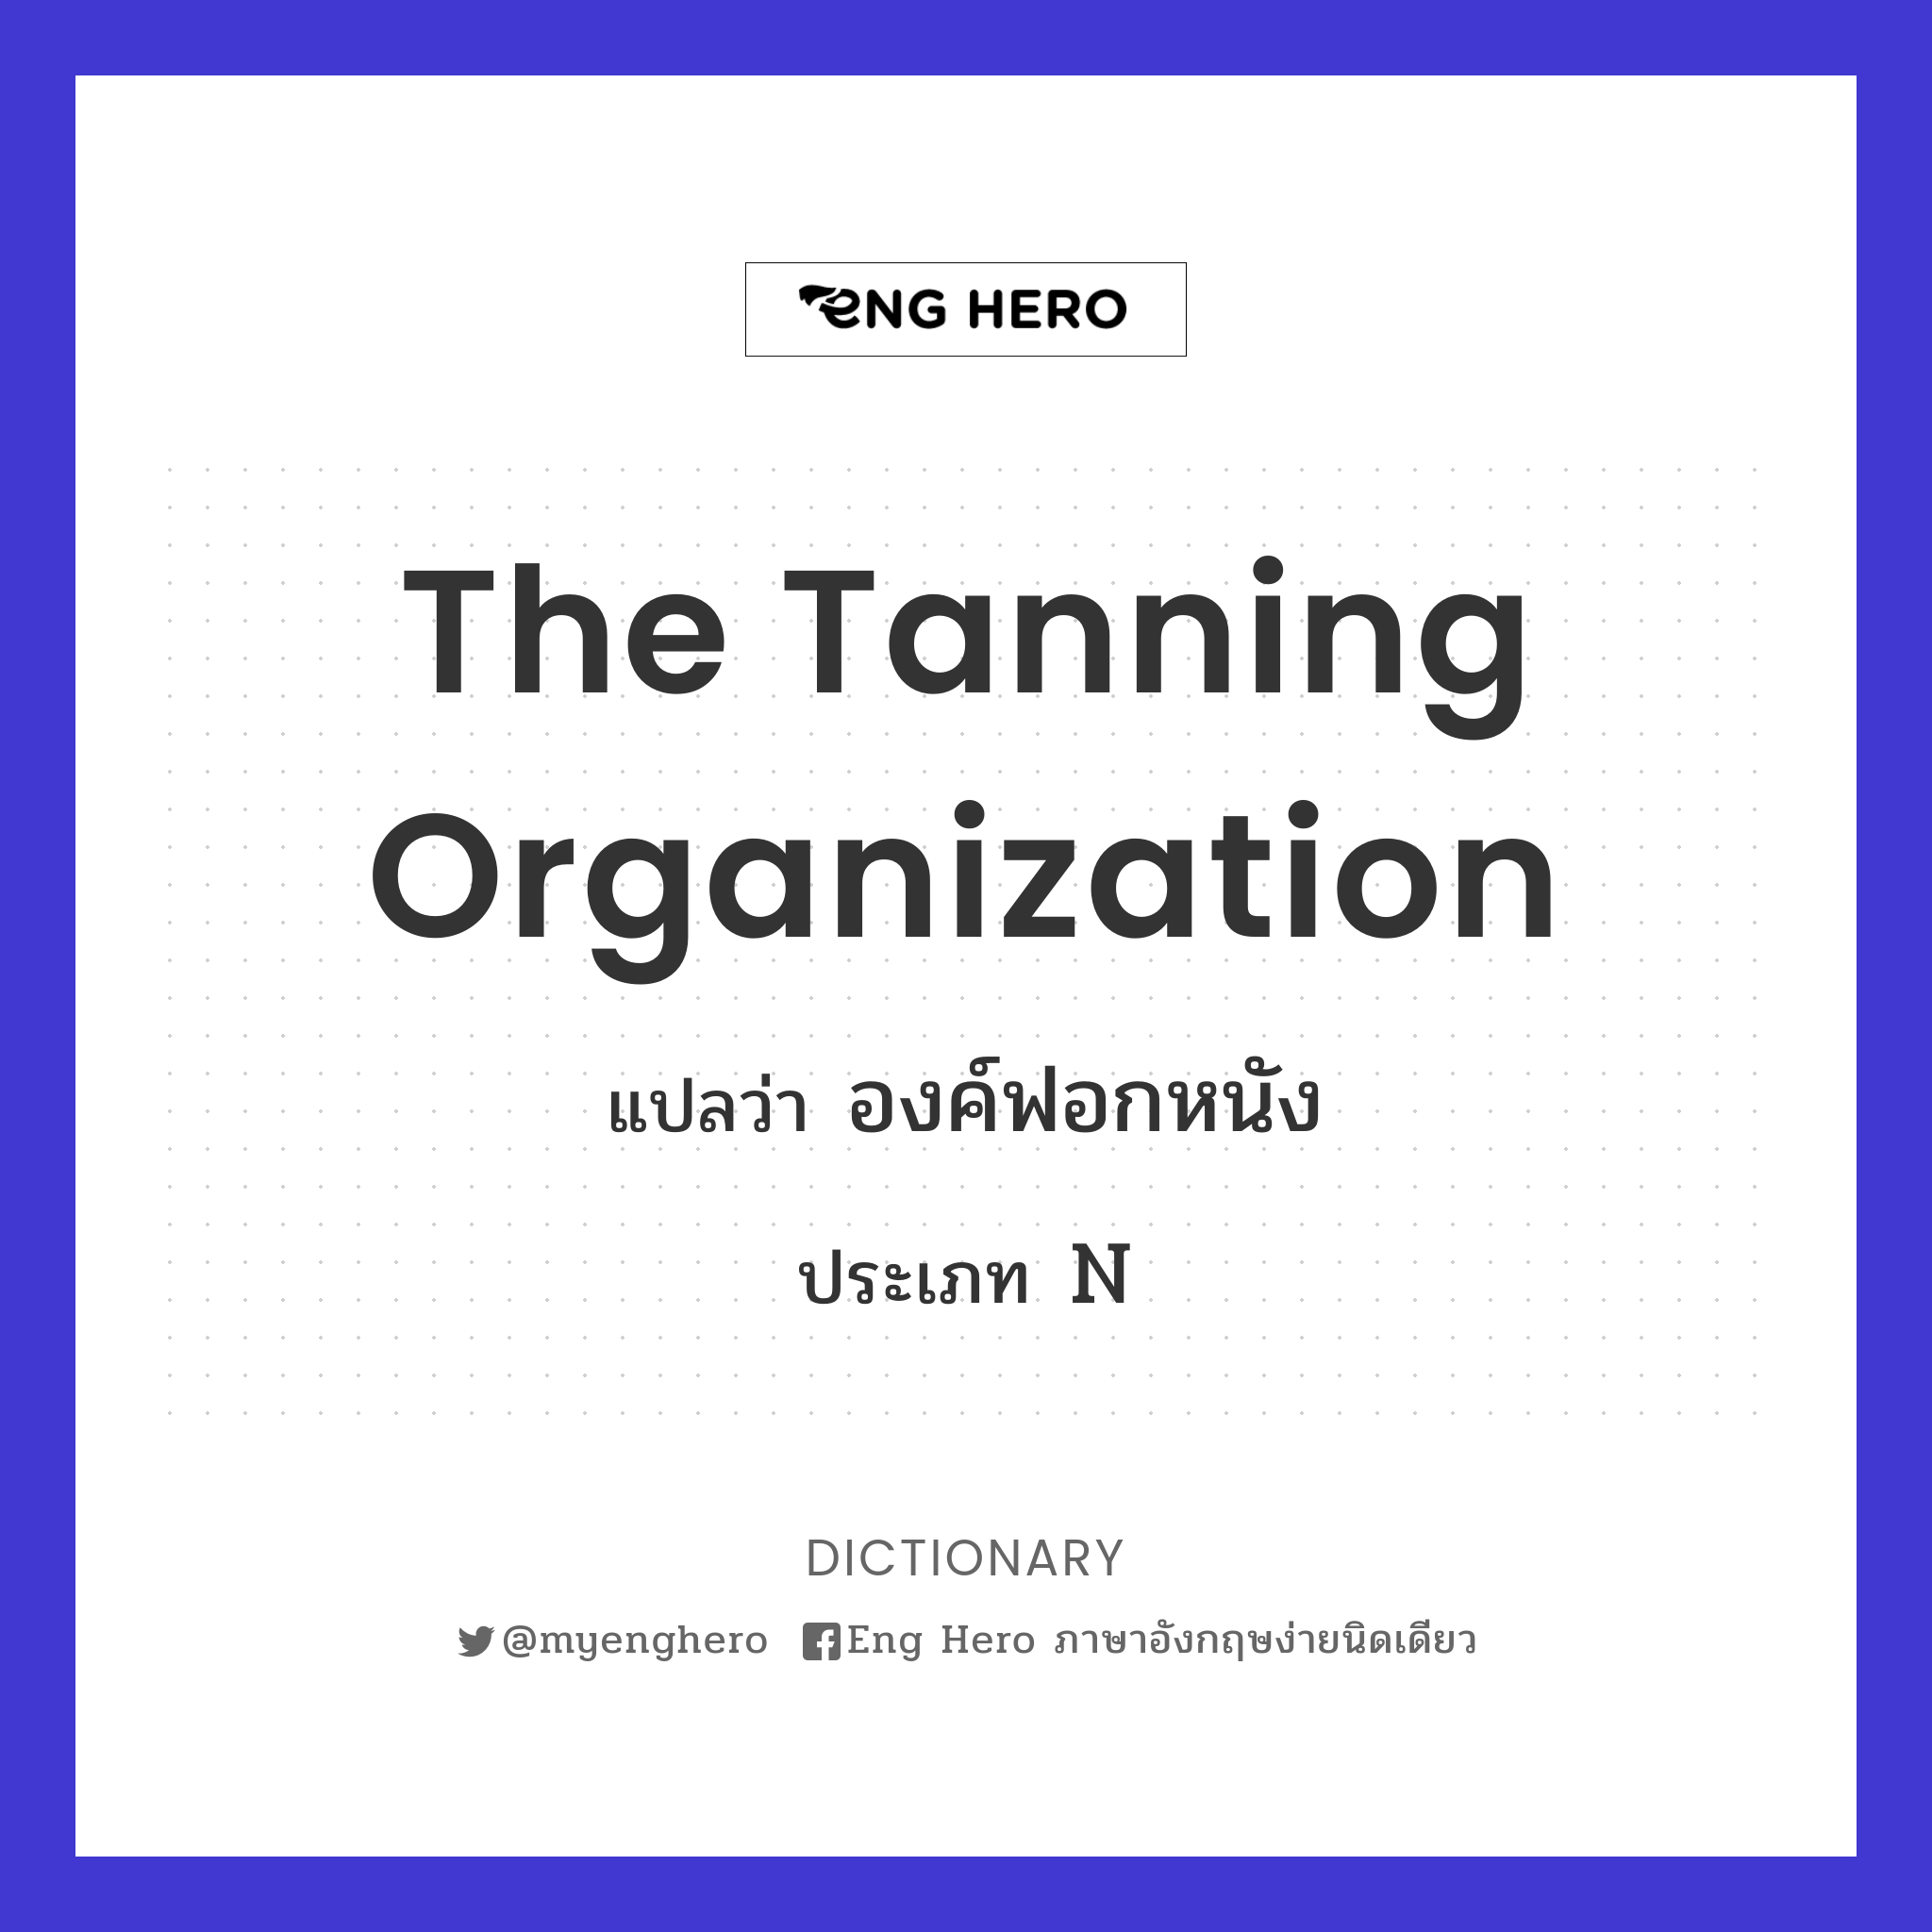 The Tanning Organization